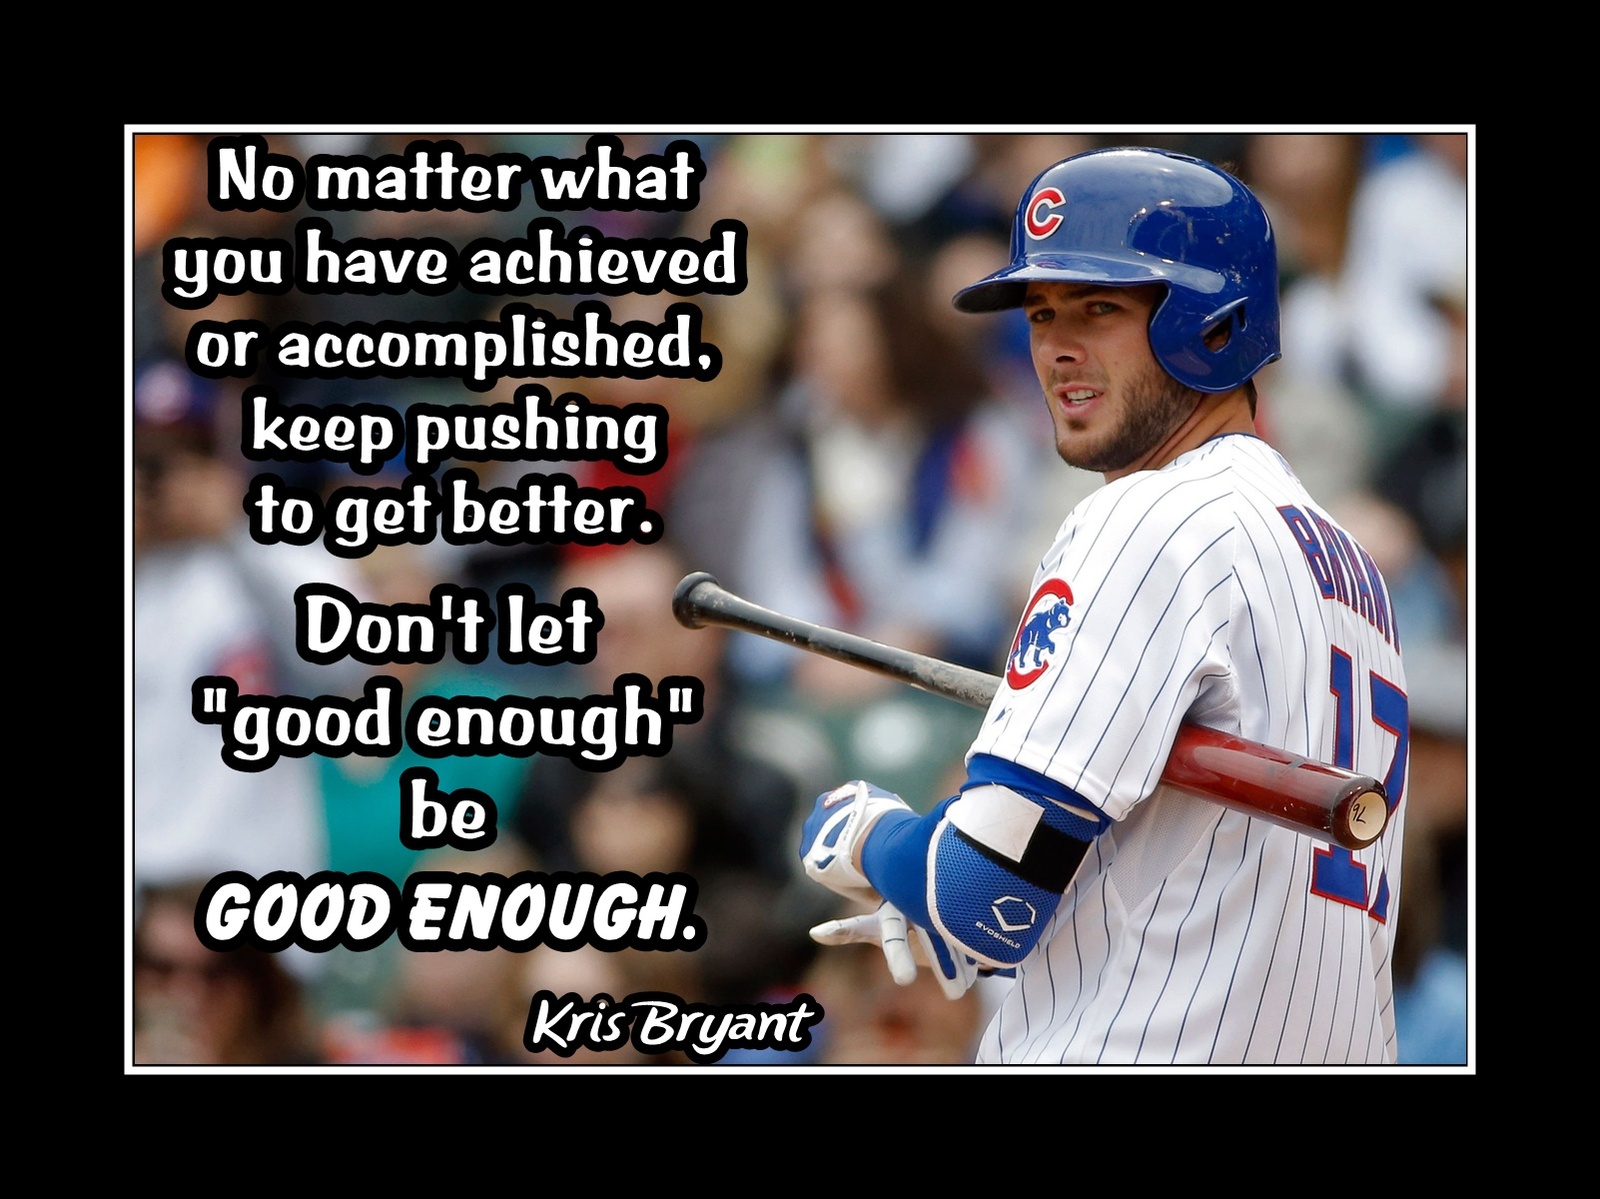 Inspirational Baseball Motivation Poster Kris Bryant Photo Quote Wall